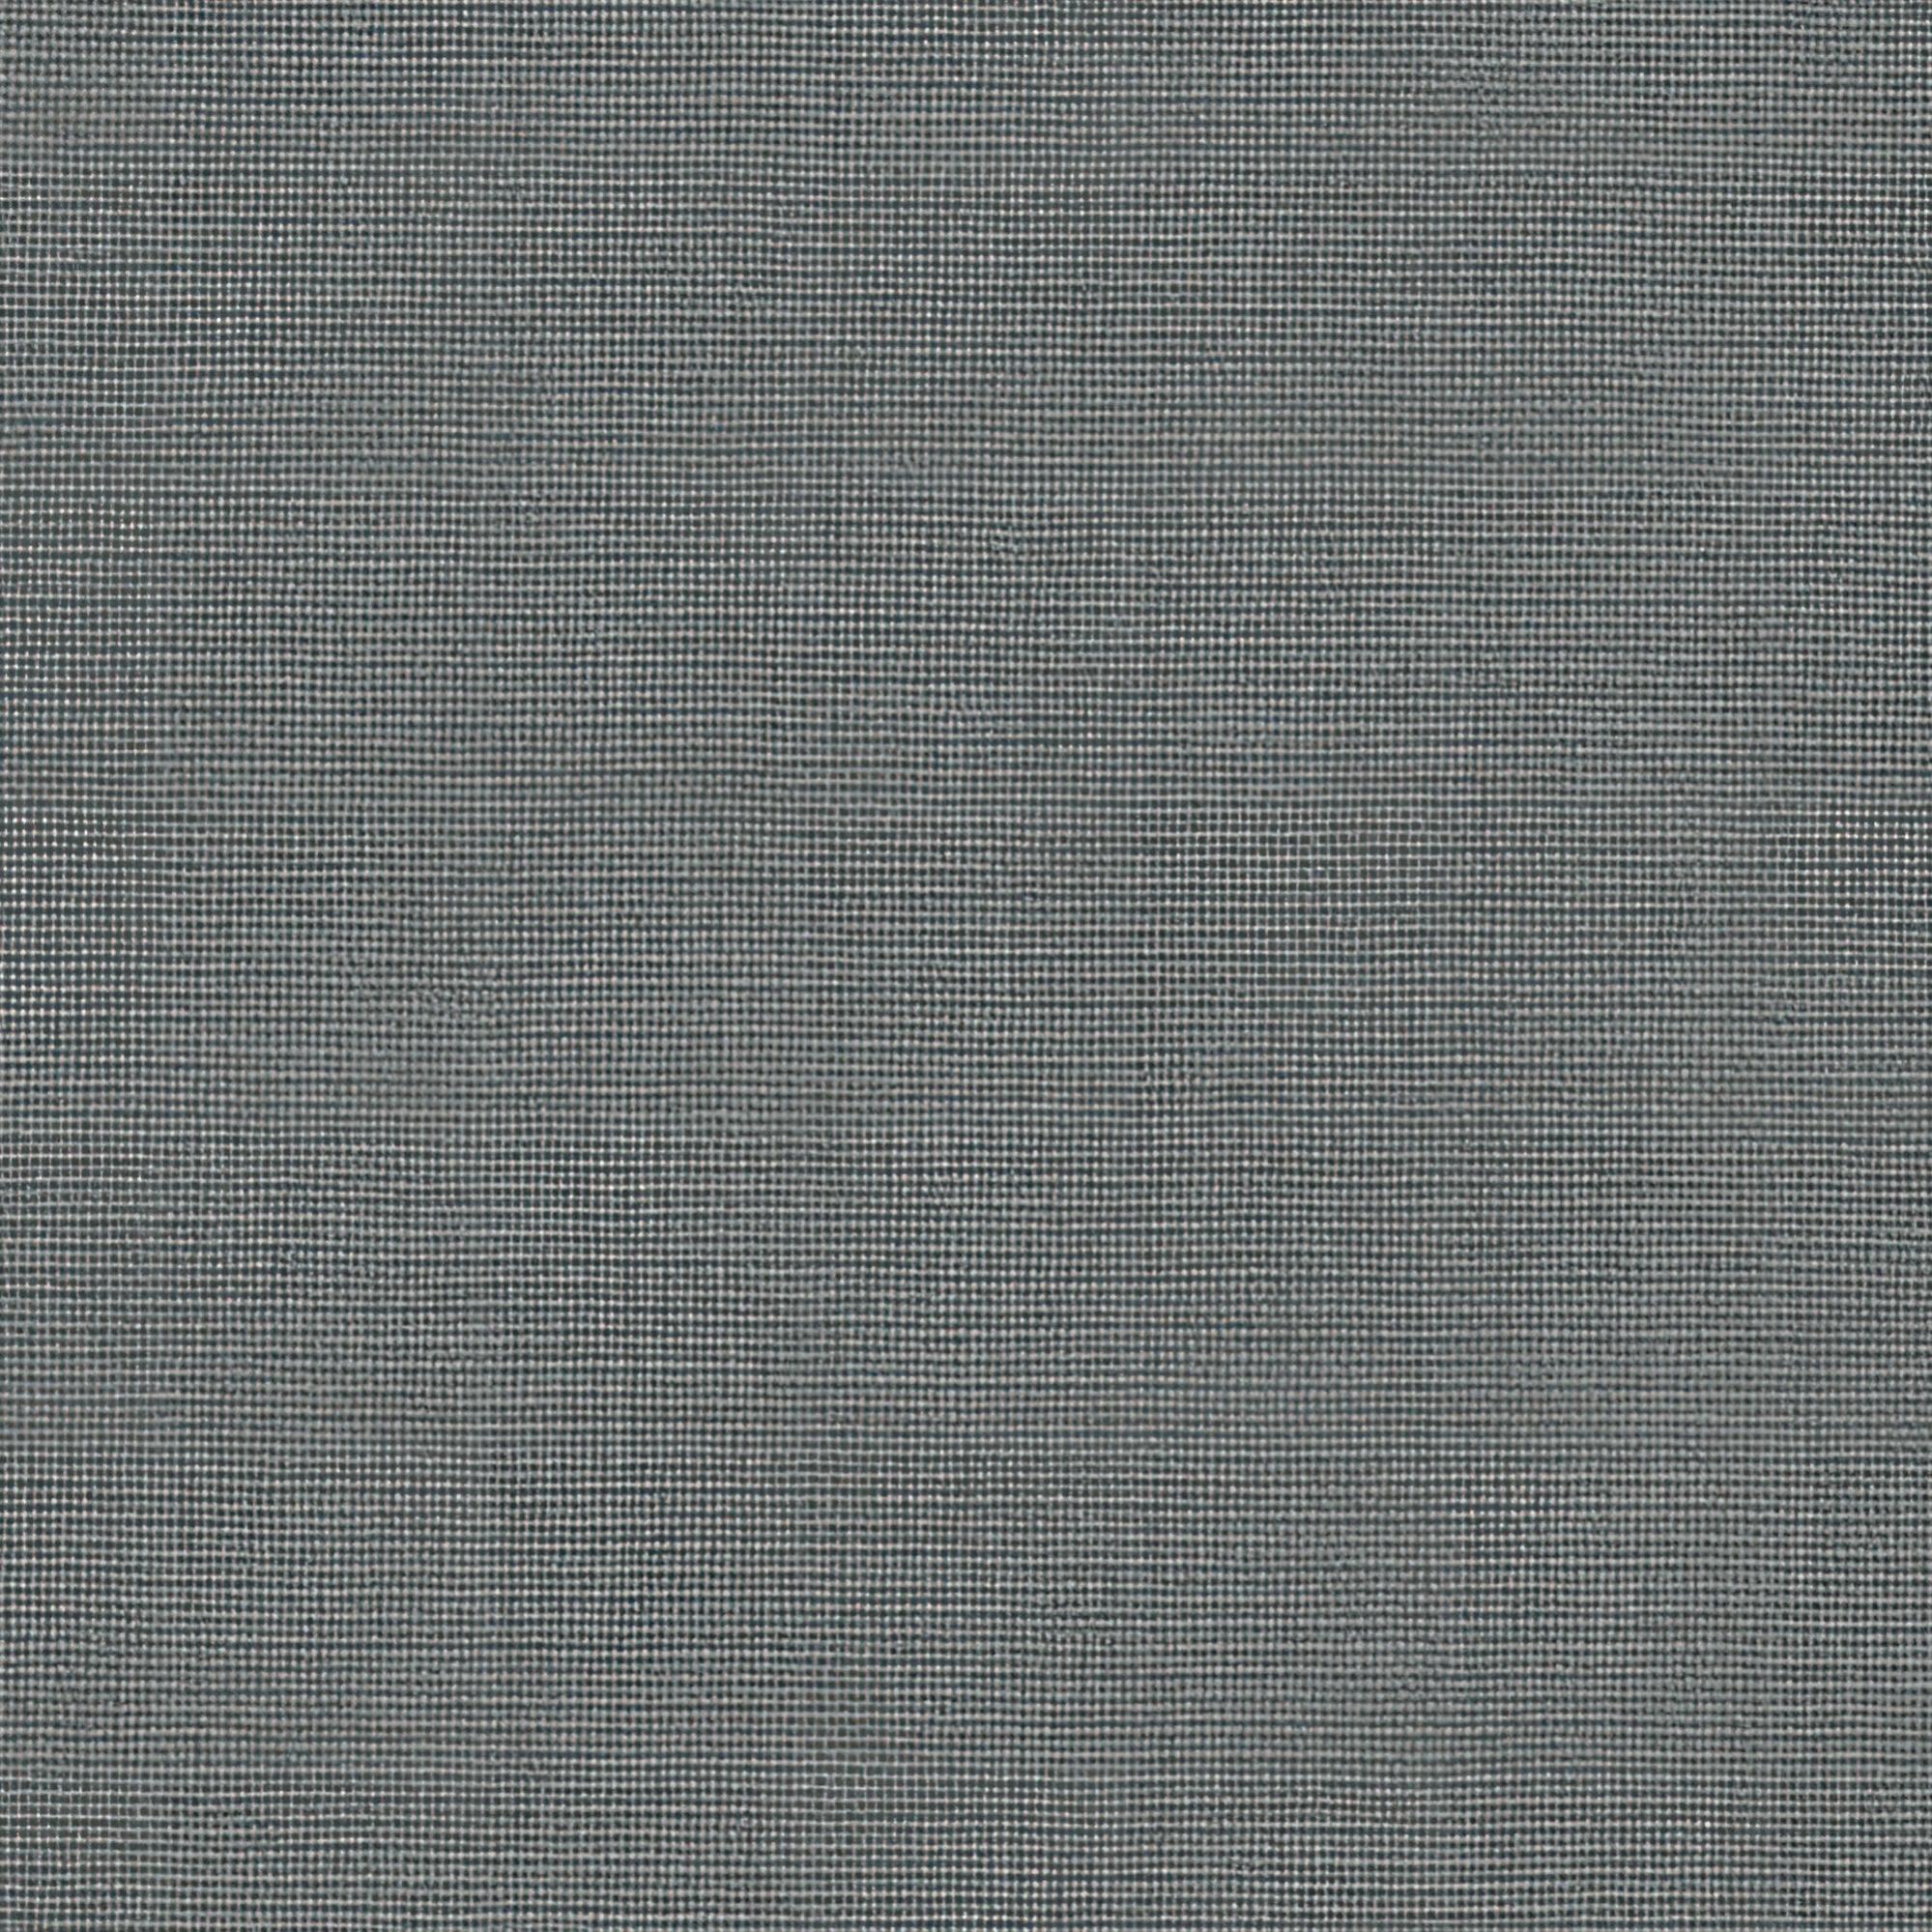 Tela al corte tapicería loneta brest azul ancho 280 cm